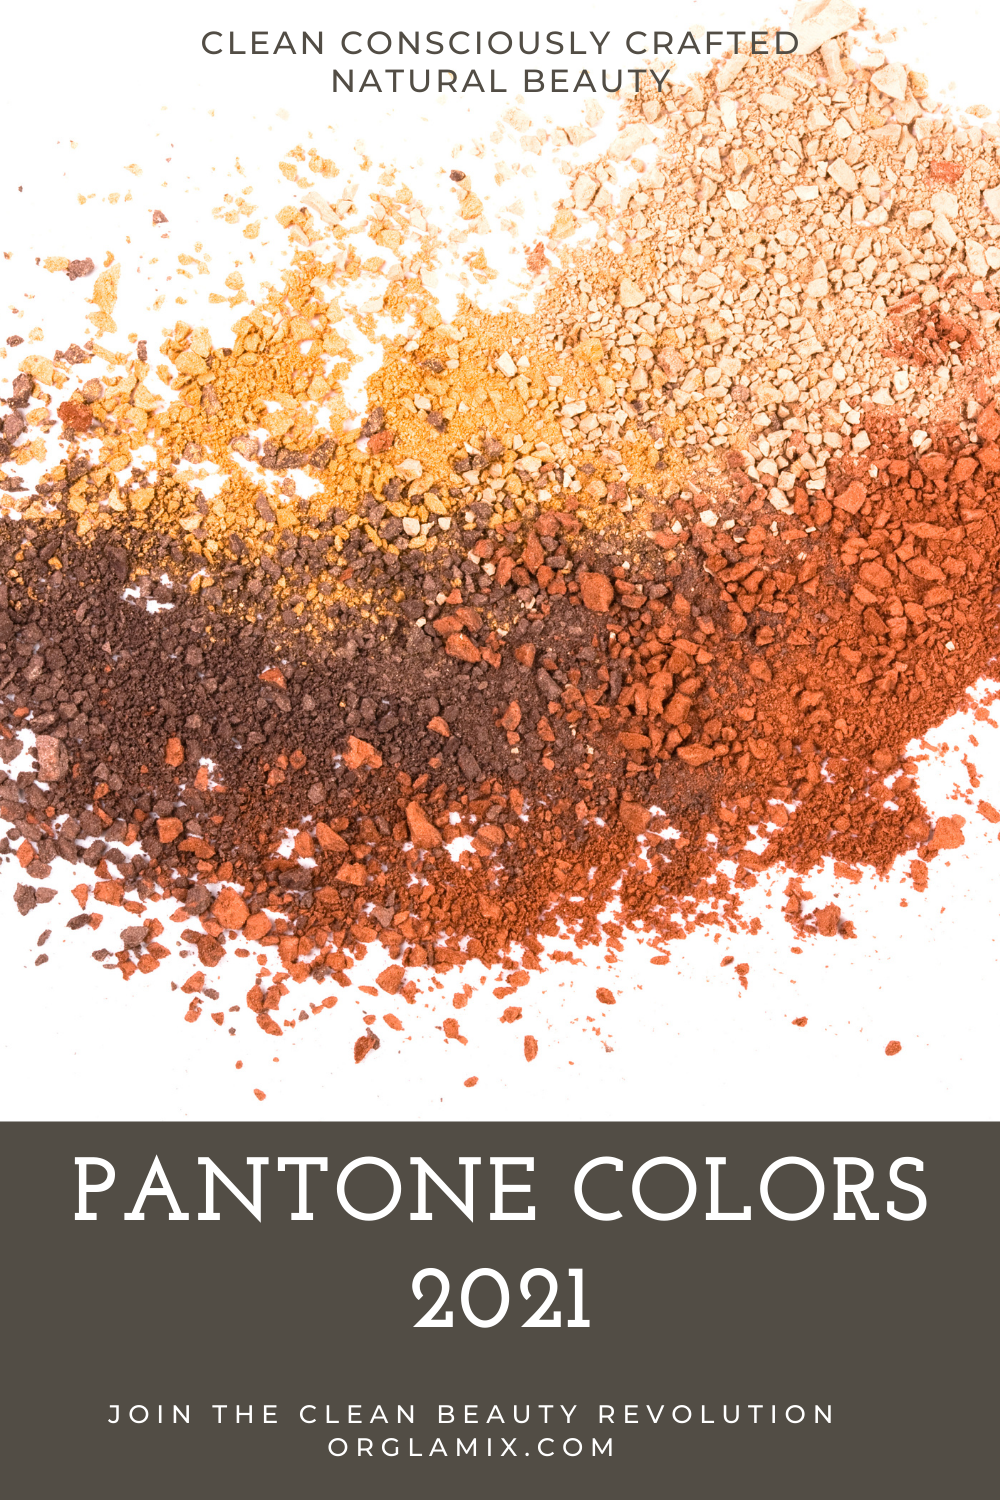 New Pantone Colors In 2021 | Orglamix